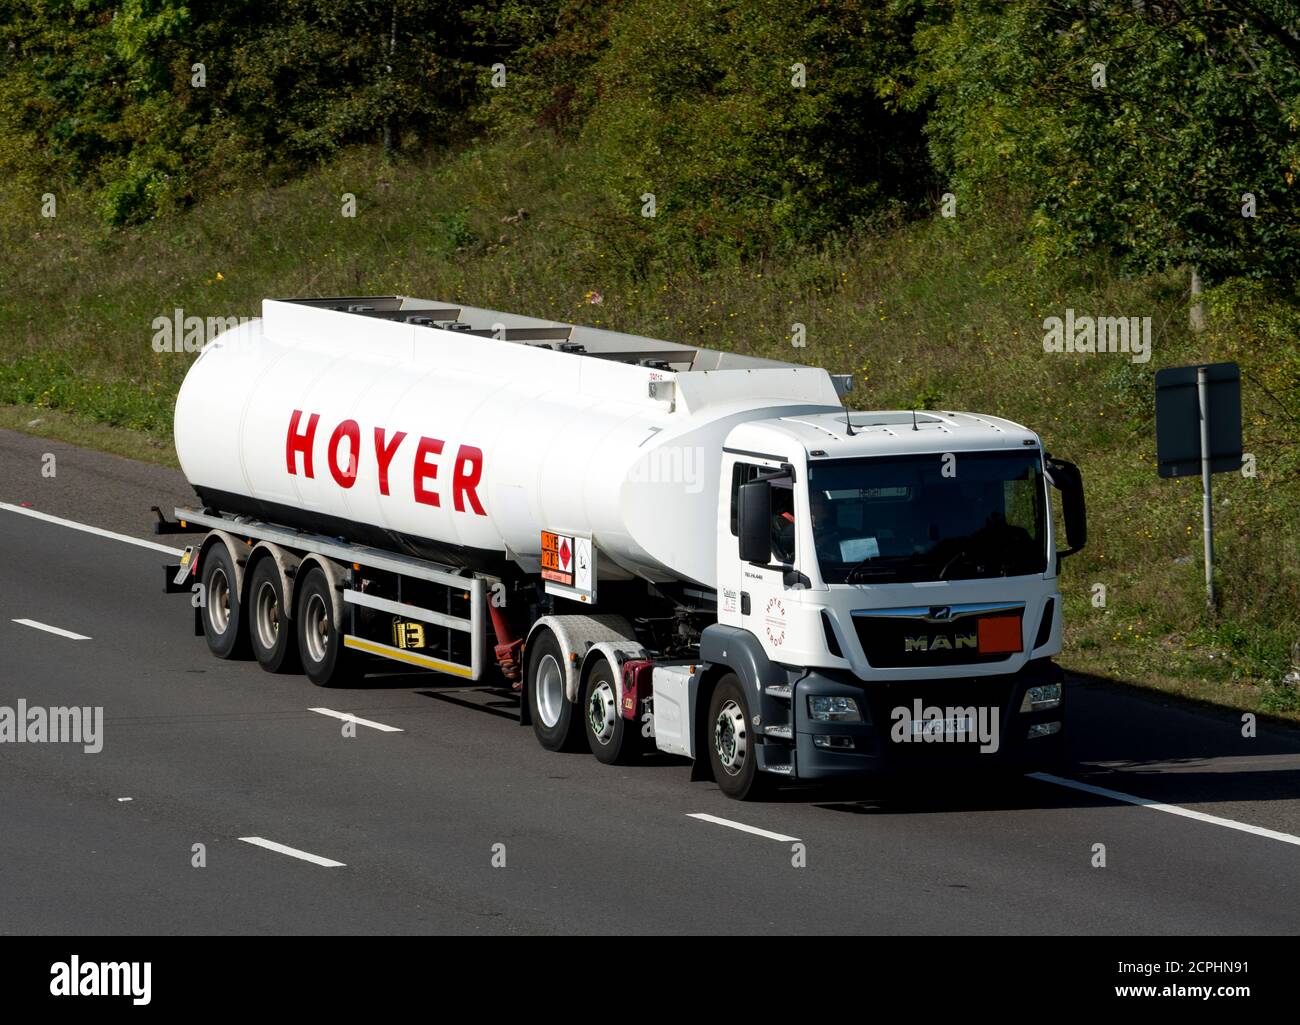 A Hoyer tanker lorry on the M40 motorway, Warwickshire, UK Stock Photo